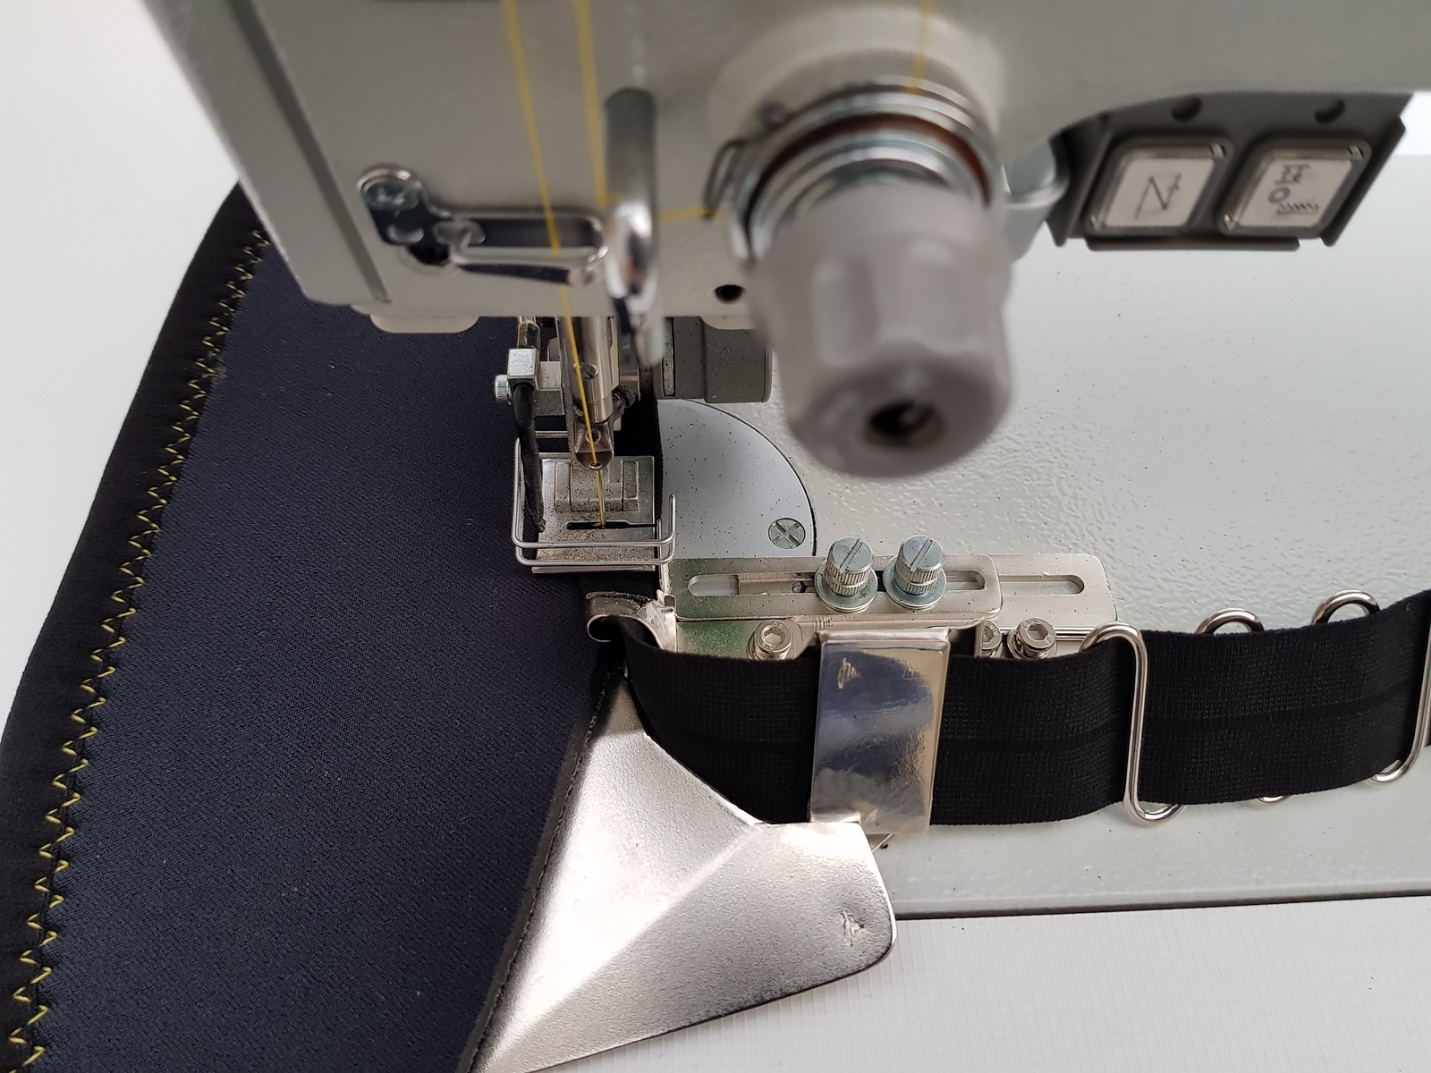 Flat bed sewing machine